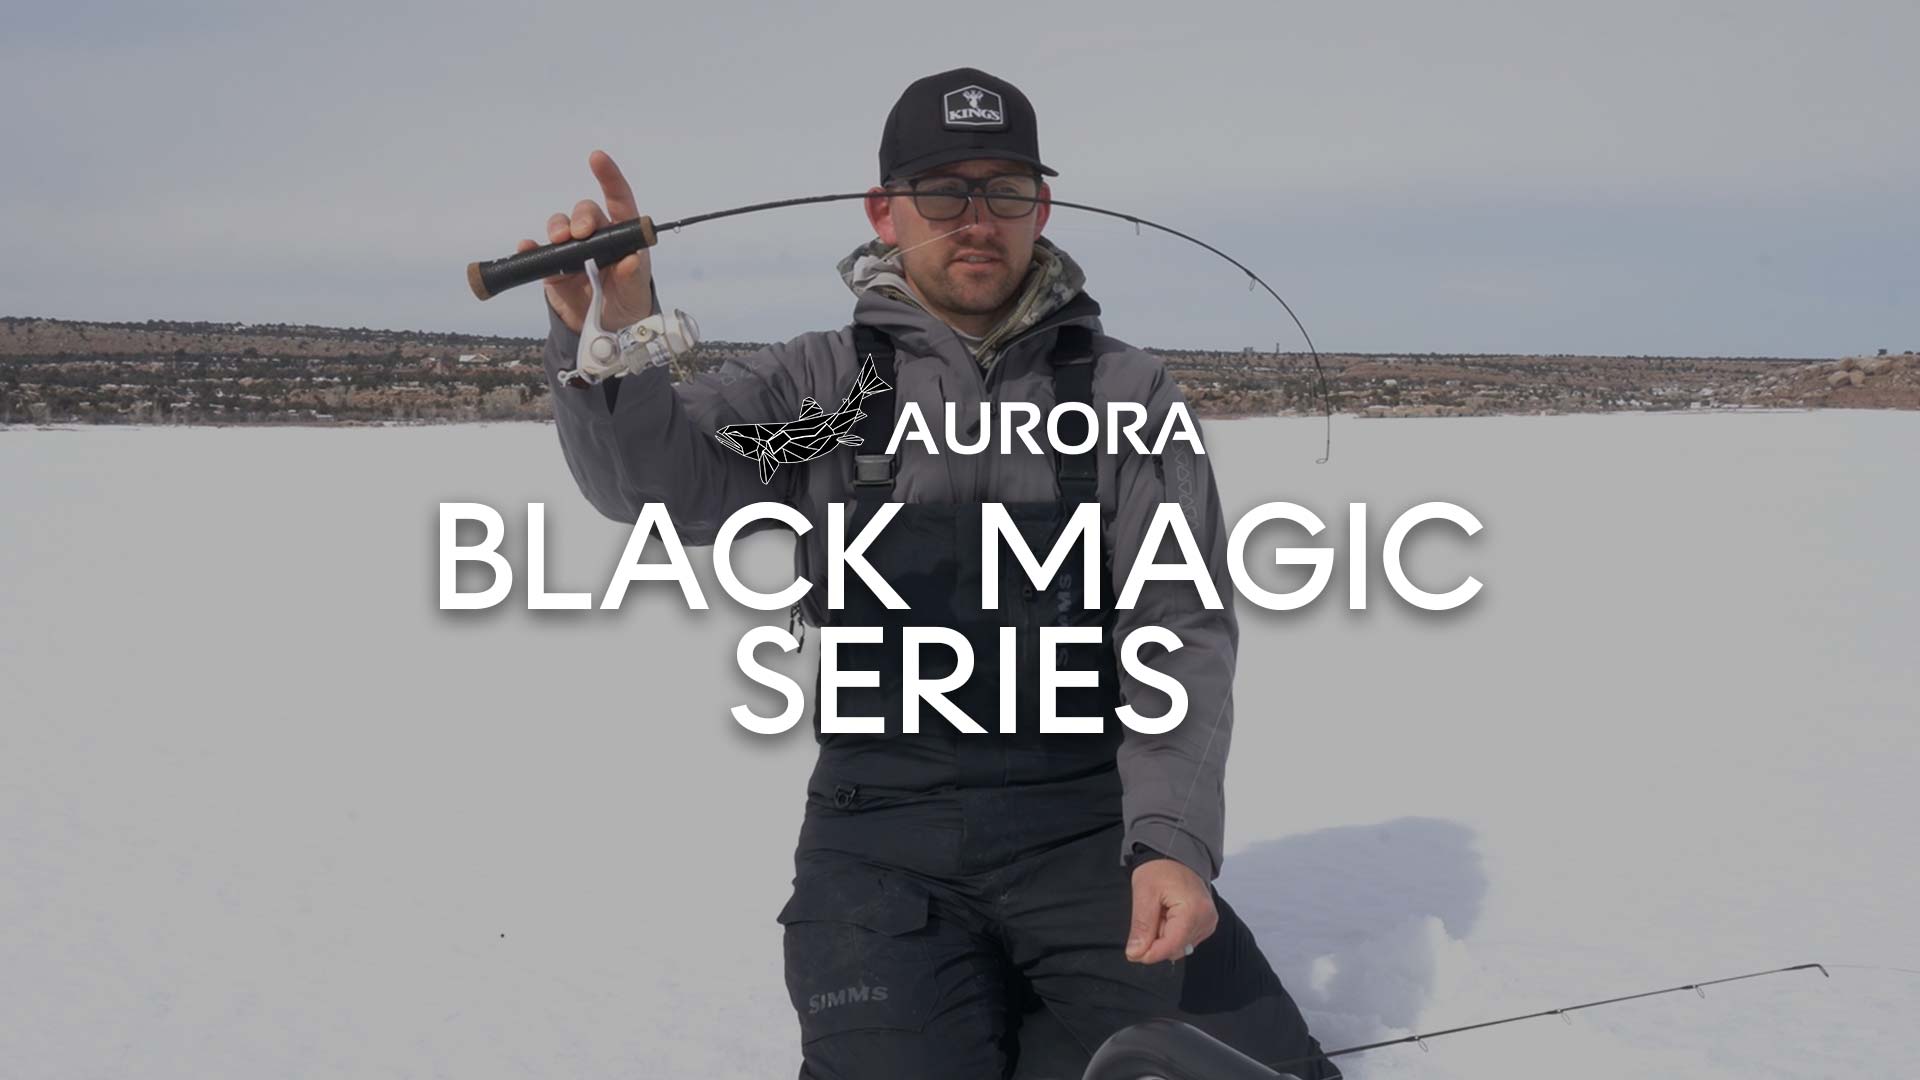 Load video: black-magic-series